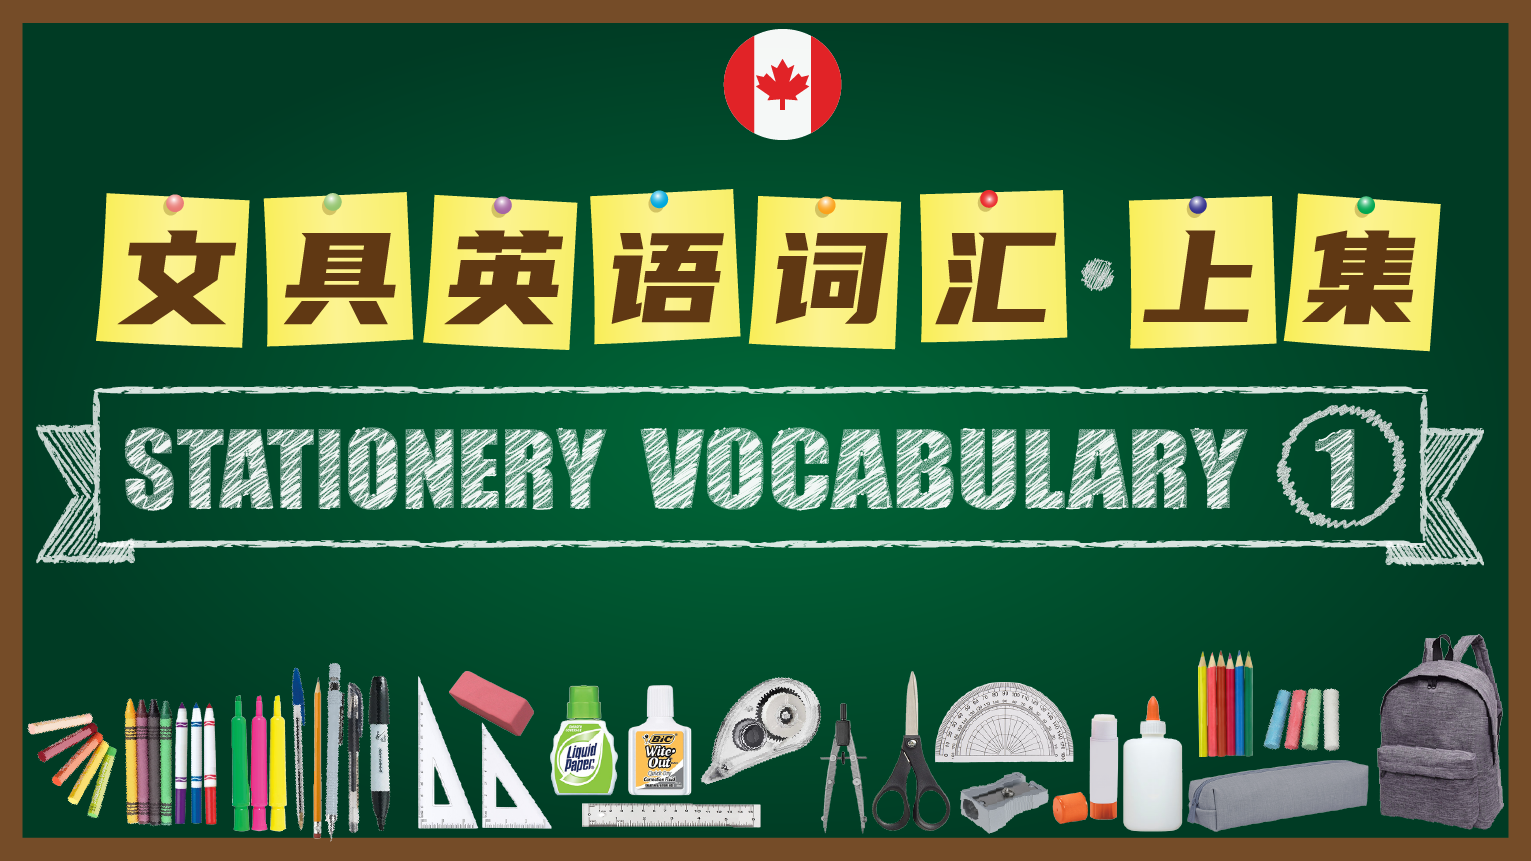 Stationery Vocabulary - Part 1